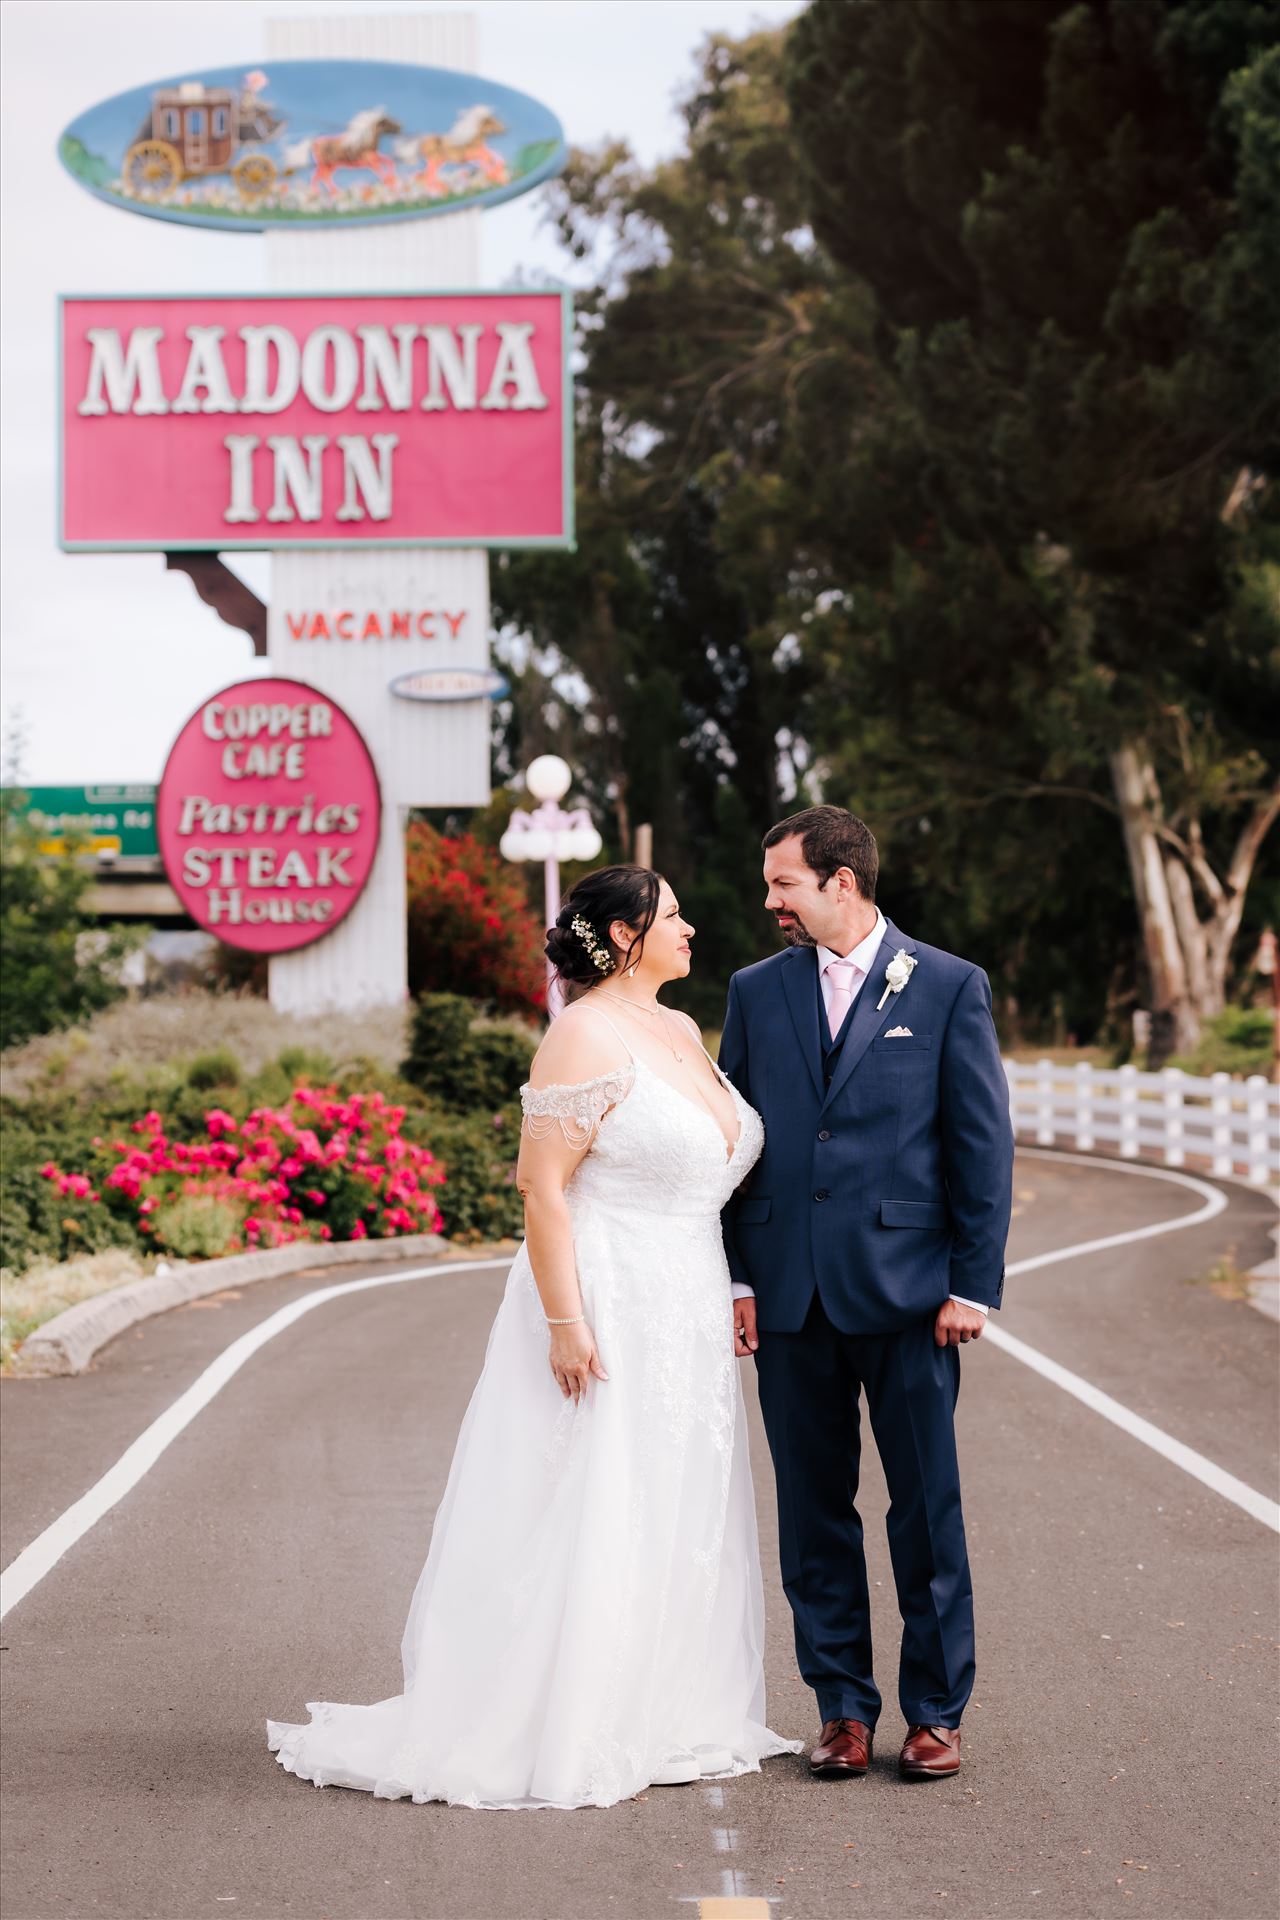 Sneak Peek--11.JPG Mirror's Edge Wedding Photography, a San Luis Obispo and Santa Barbara County photographer capture the Nagy's Madonna Inn Wedding. Madonna Inn Sign. by Sarah Williams